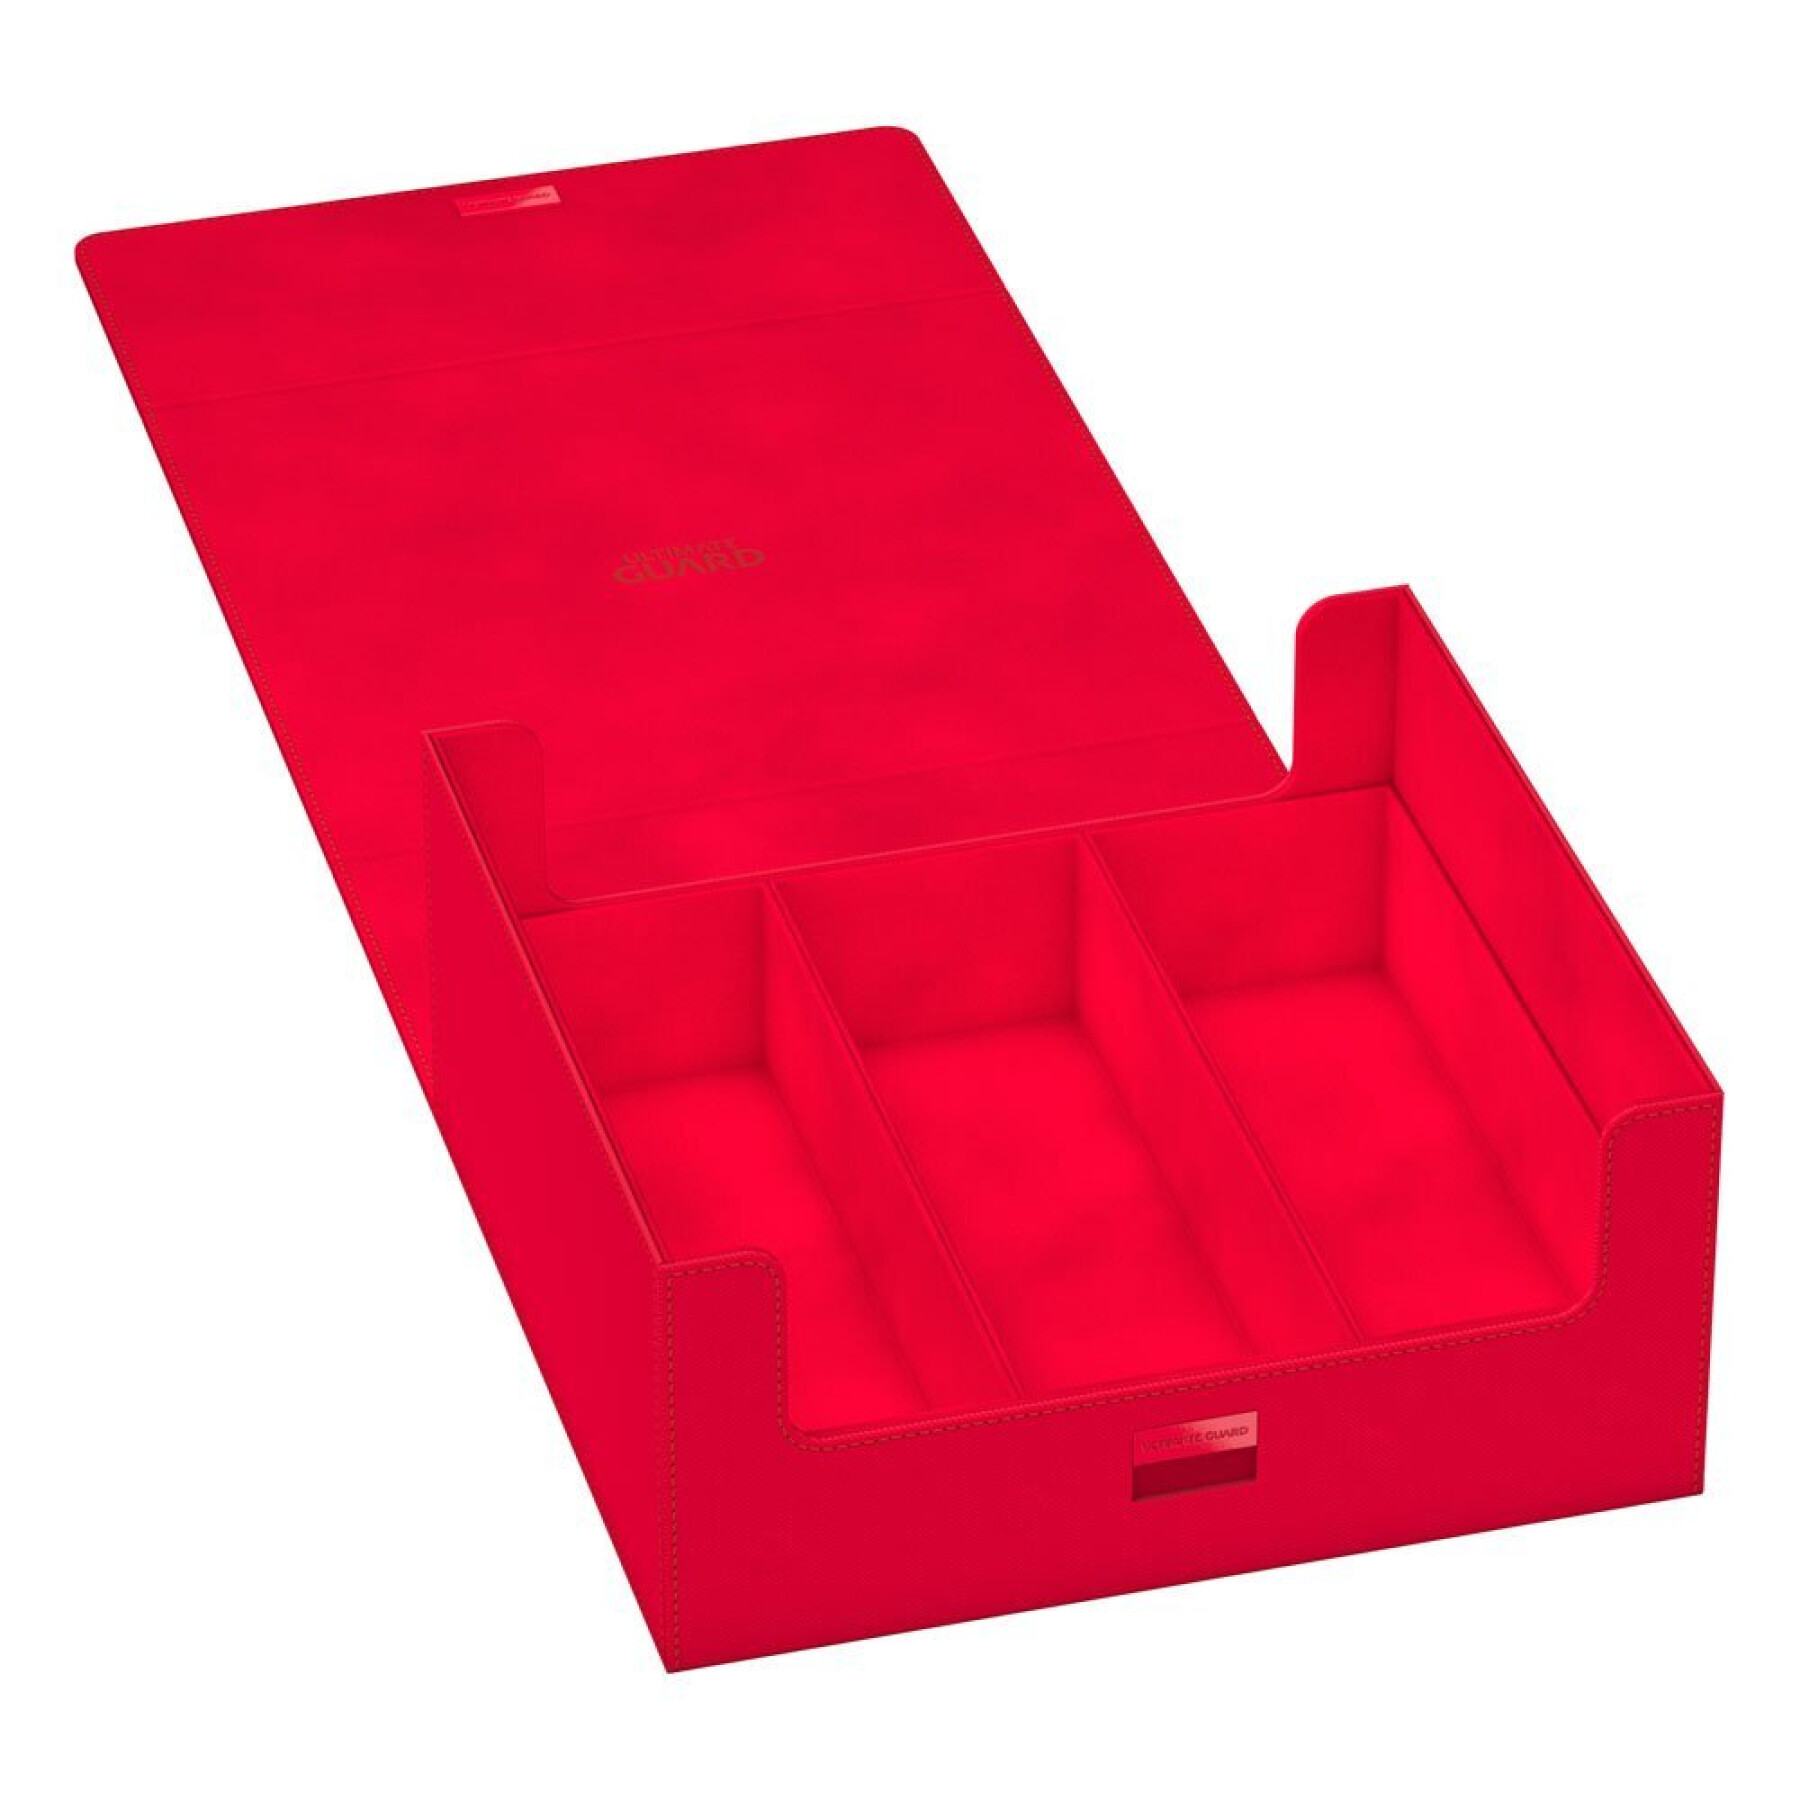 Storage box Ultimate Guard Treasurehive 90+ Xenoskin